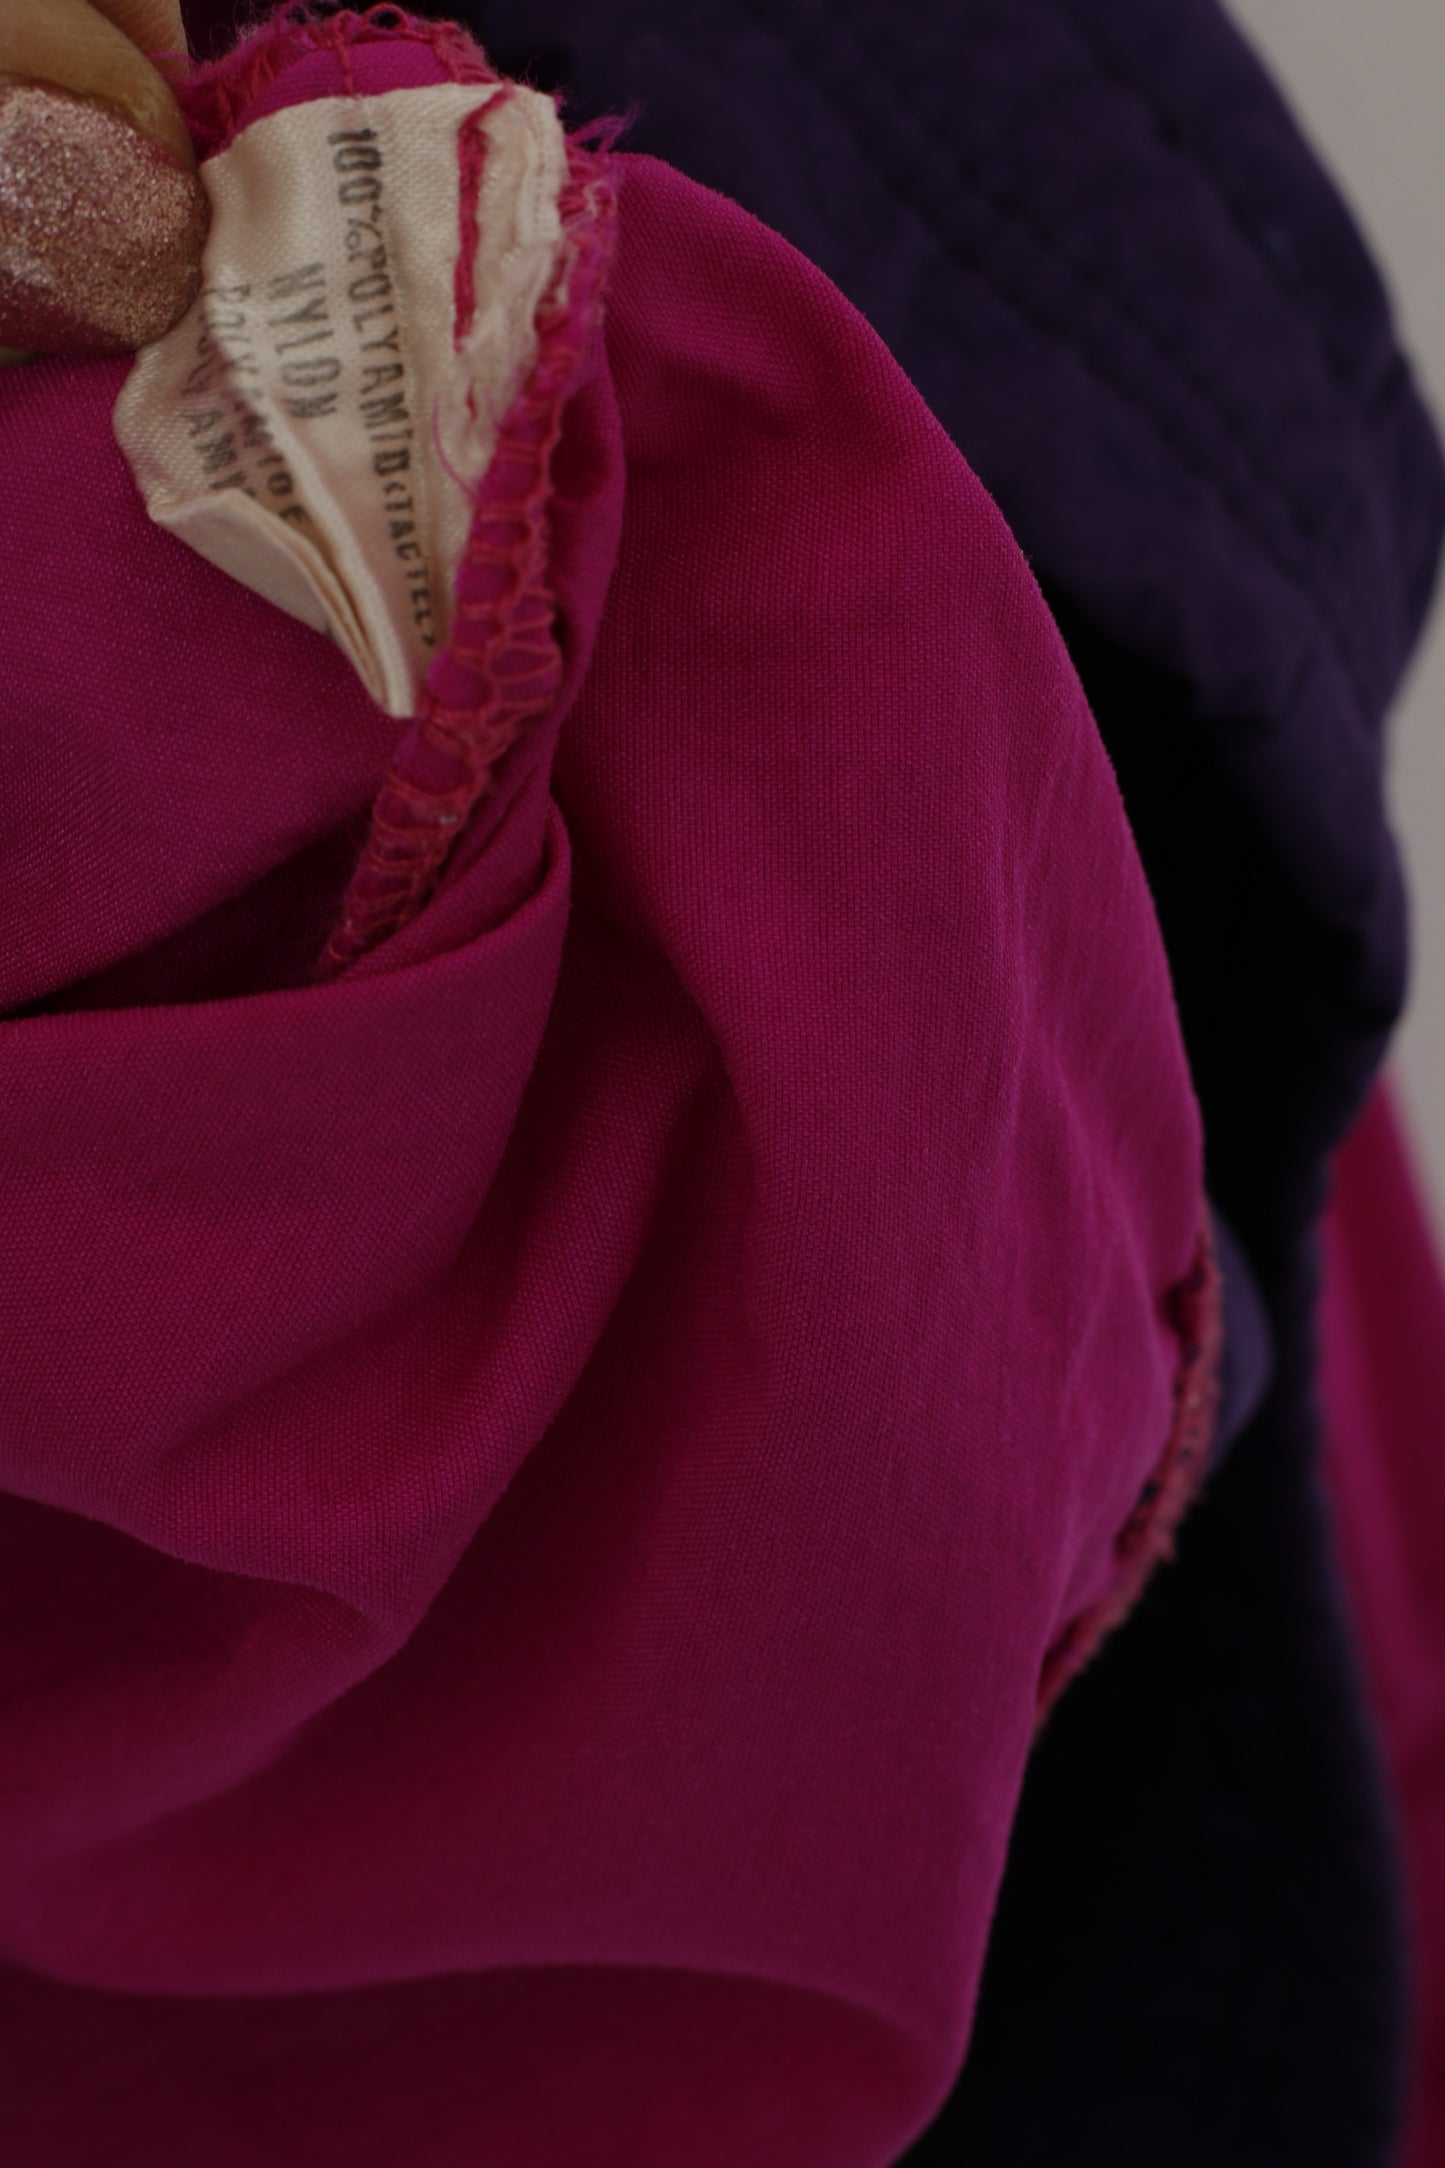 Reebok Women XL Pullover Jacket Amaranth Vintage Activewear Pockets Festival Top